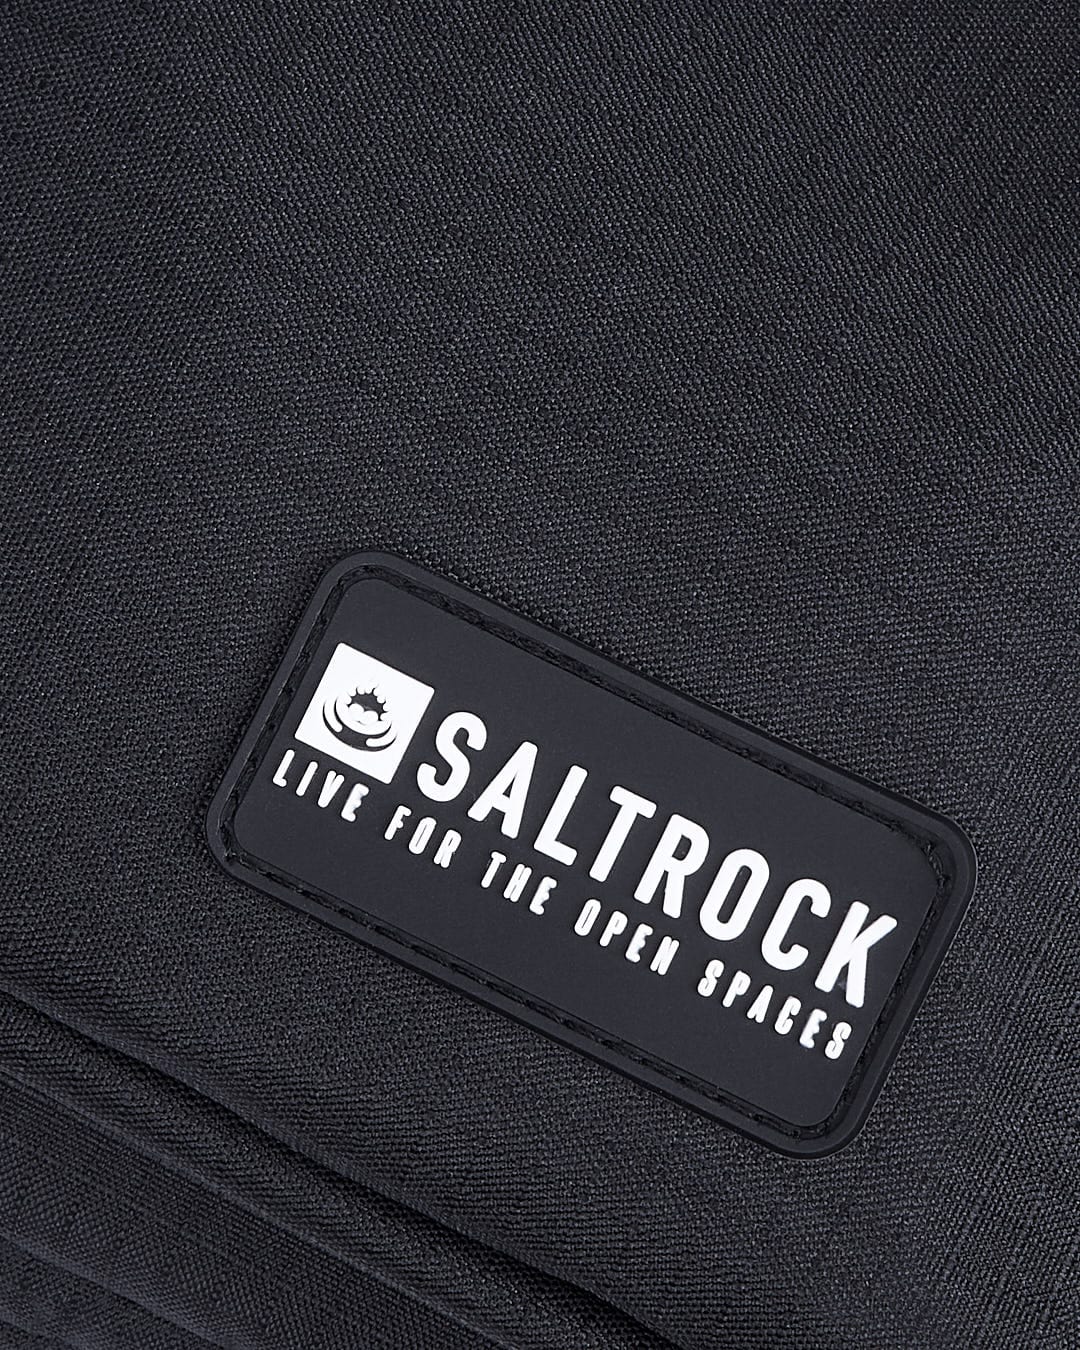 A Coda - Cross-Body Bag - Black with the Saltrock logo on it.